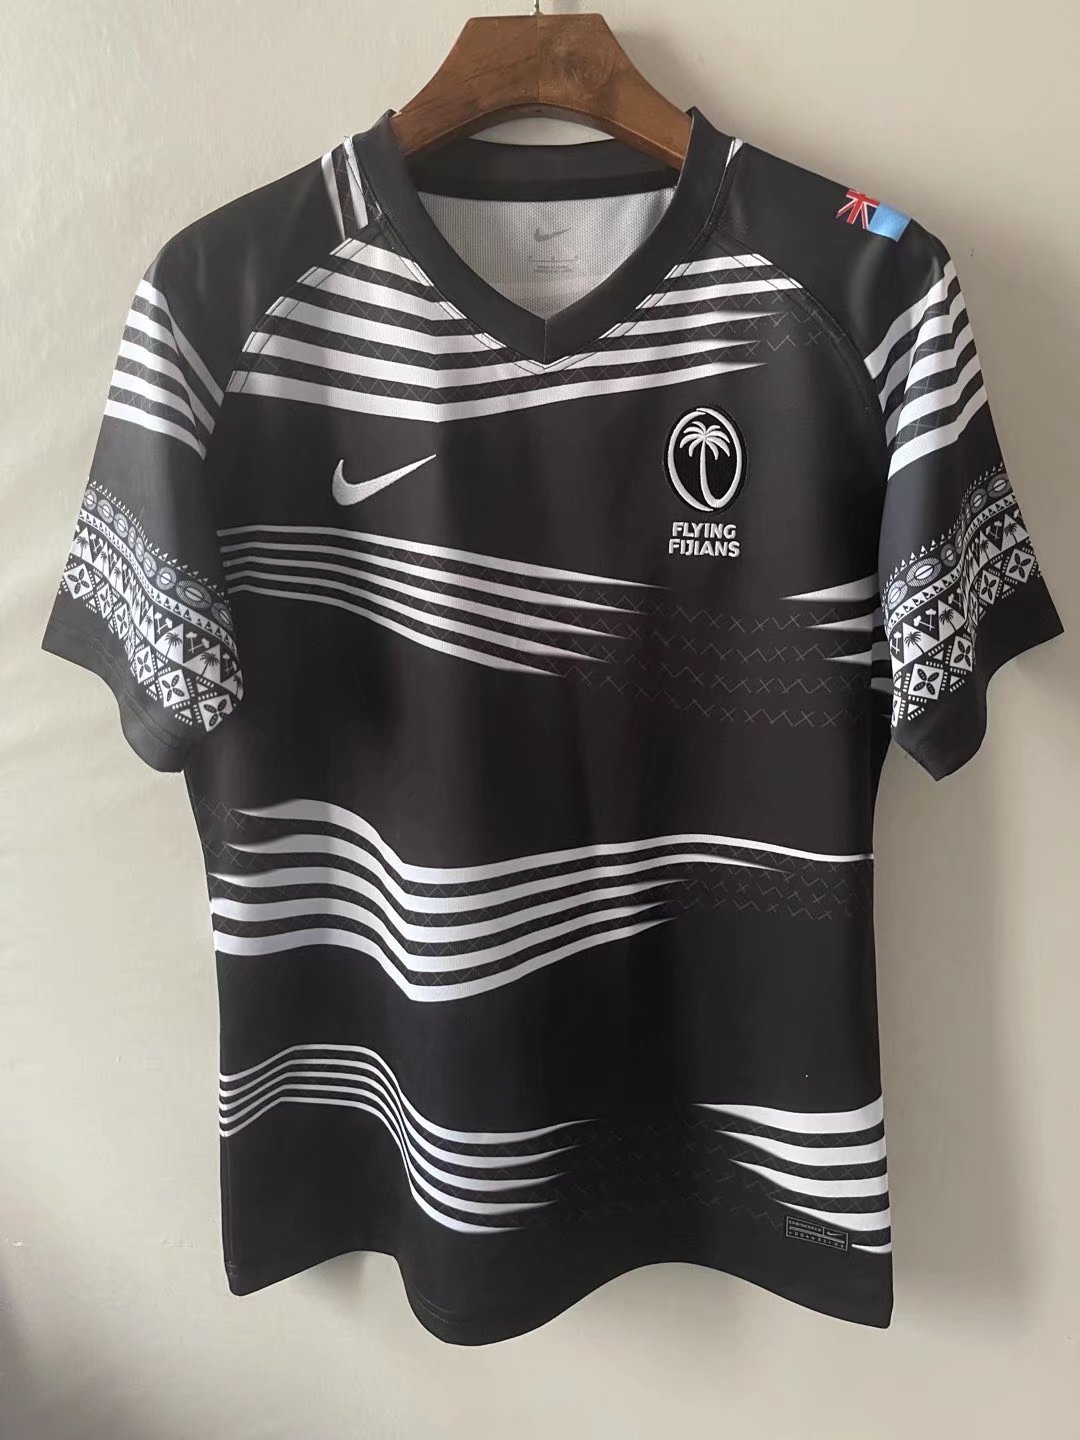 2021-2022 Fiji Home Black Thailand Rugby Shirts-805